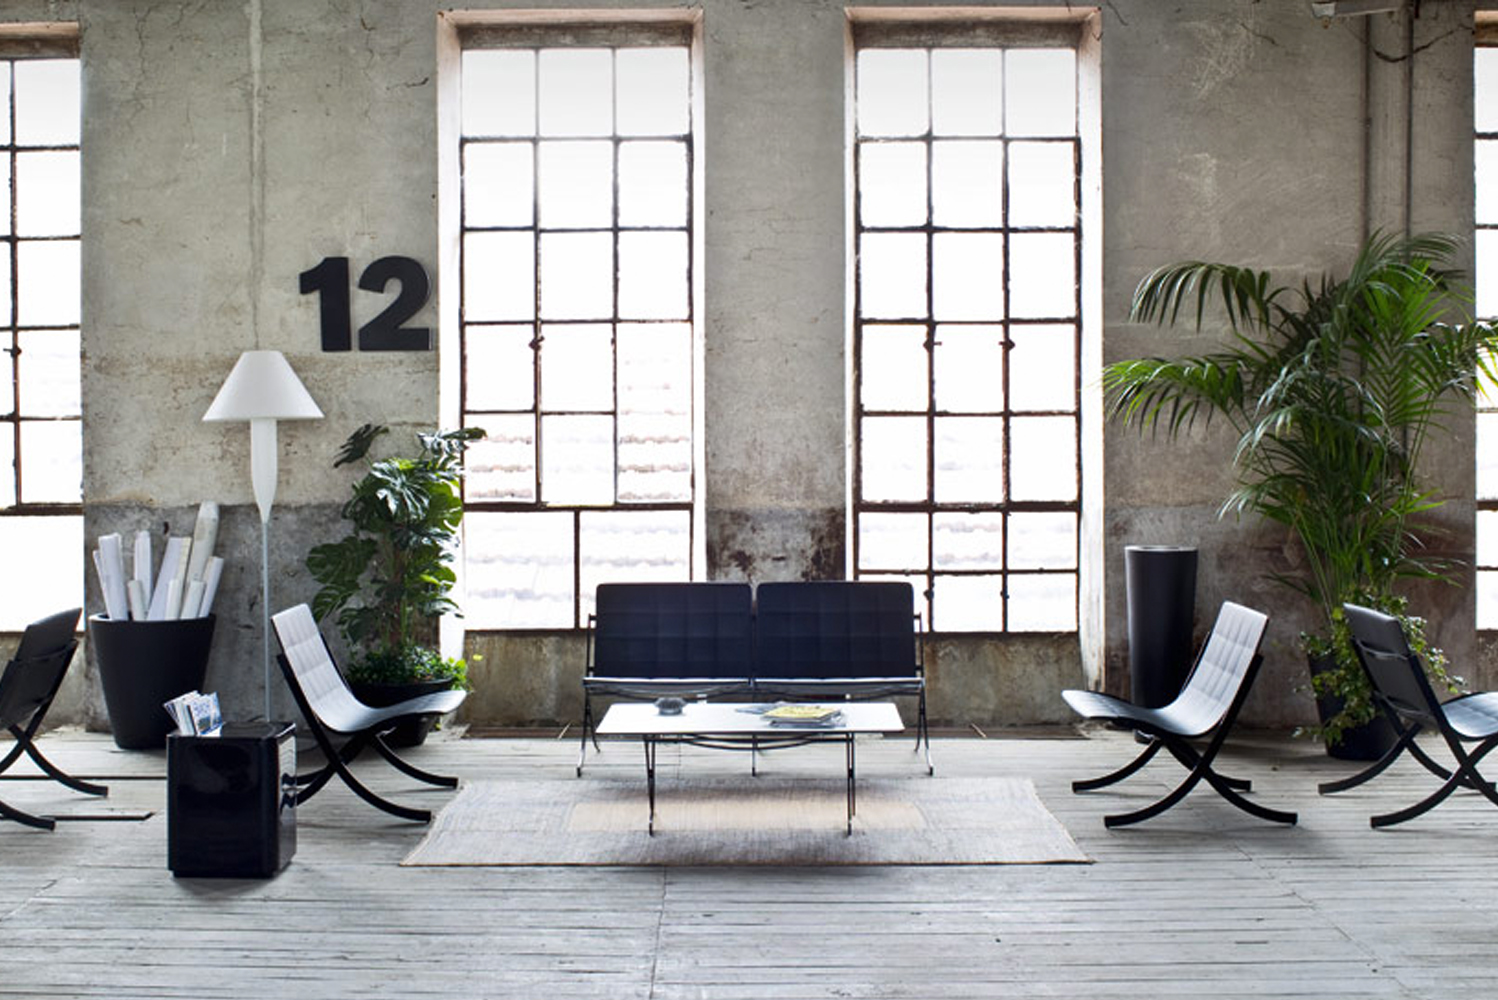 Mies van der Rohes Barcelona chair was re-interpreted by Deep Design for Italian brand Serralunga 